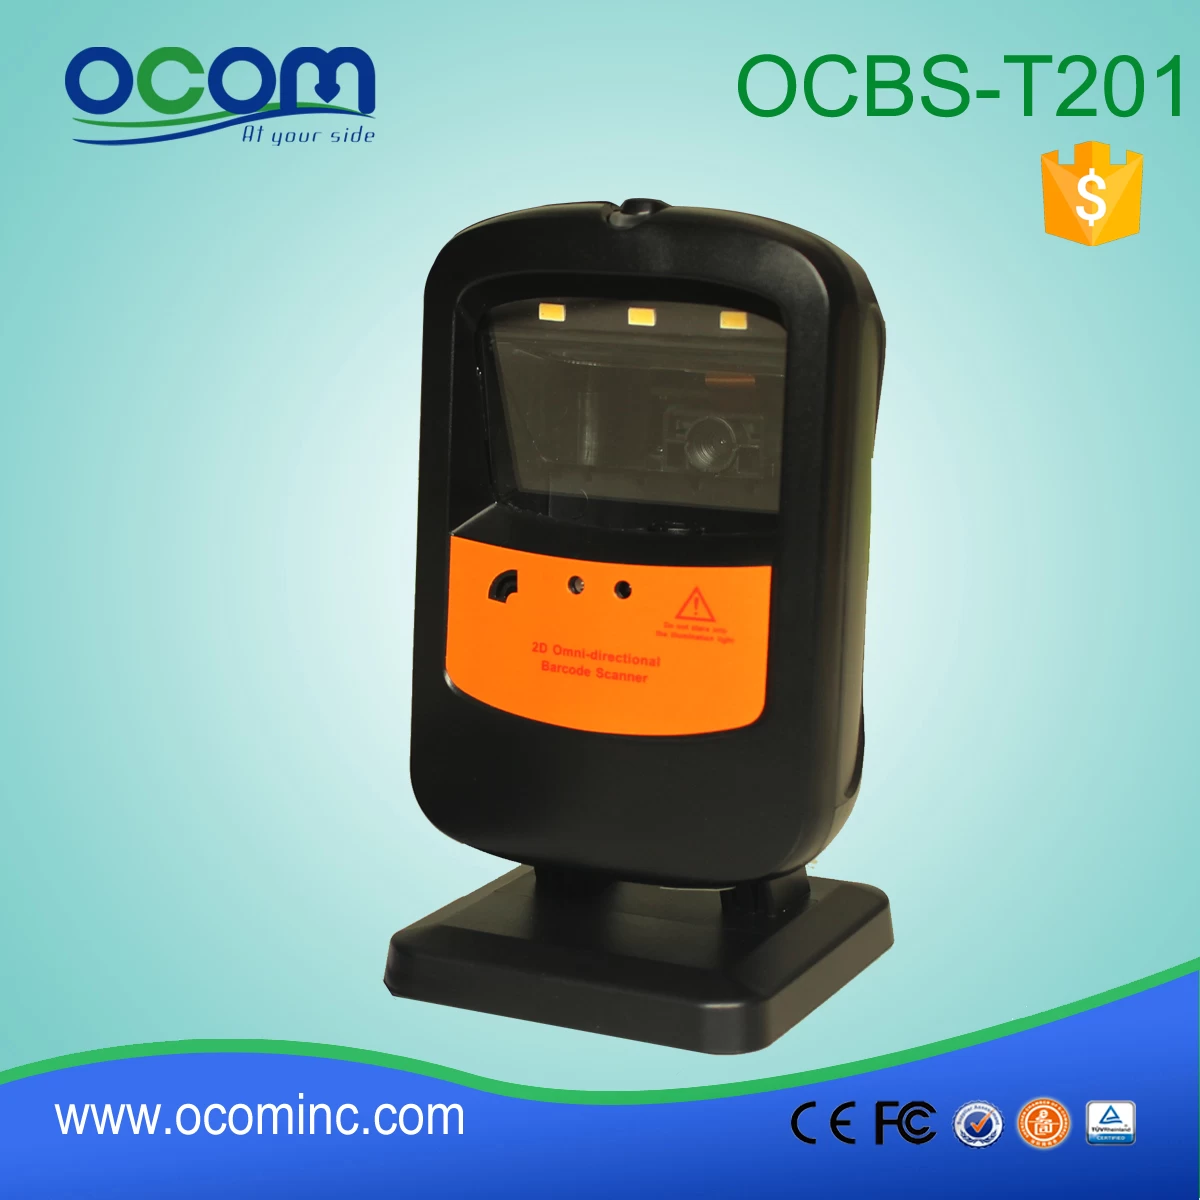 OCBS-T201:supermarket barcode scanner module, barcode scanner mini usb